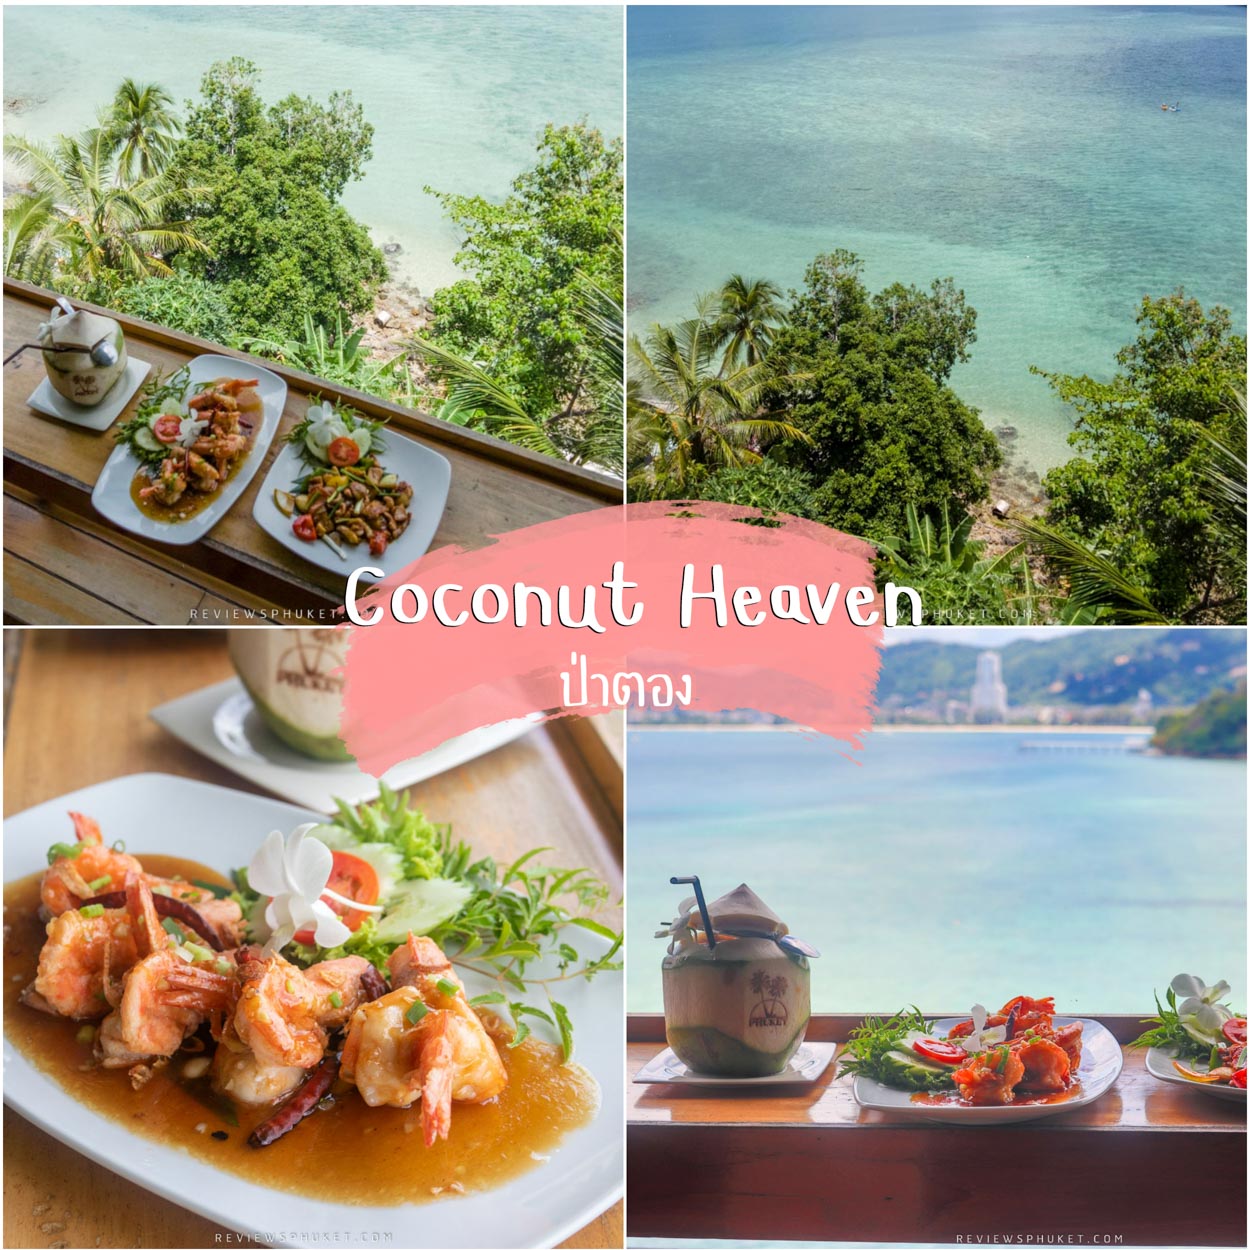 Coconut Heaven ป่าตอง ที่สุดแห่งร้านอาหารวิวหลักล้าน ที่ใช้ Coconut หรือมะพร้าวเป็นซิกเนเจอร์หลักของร้าน